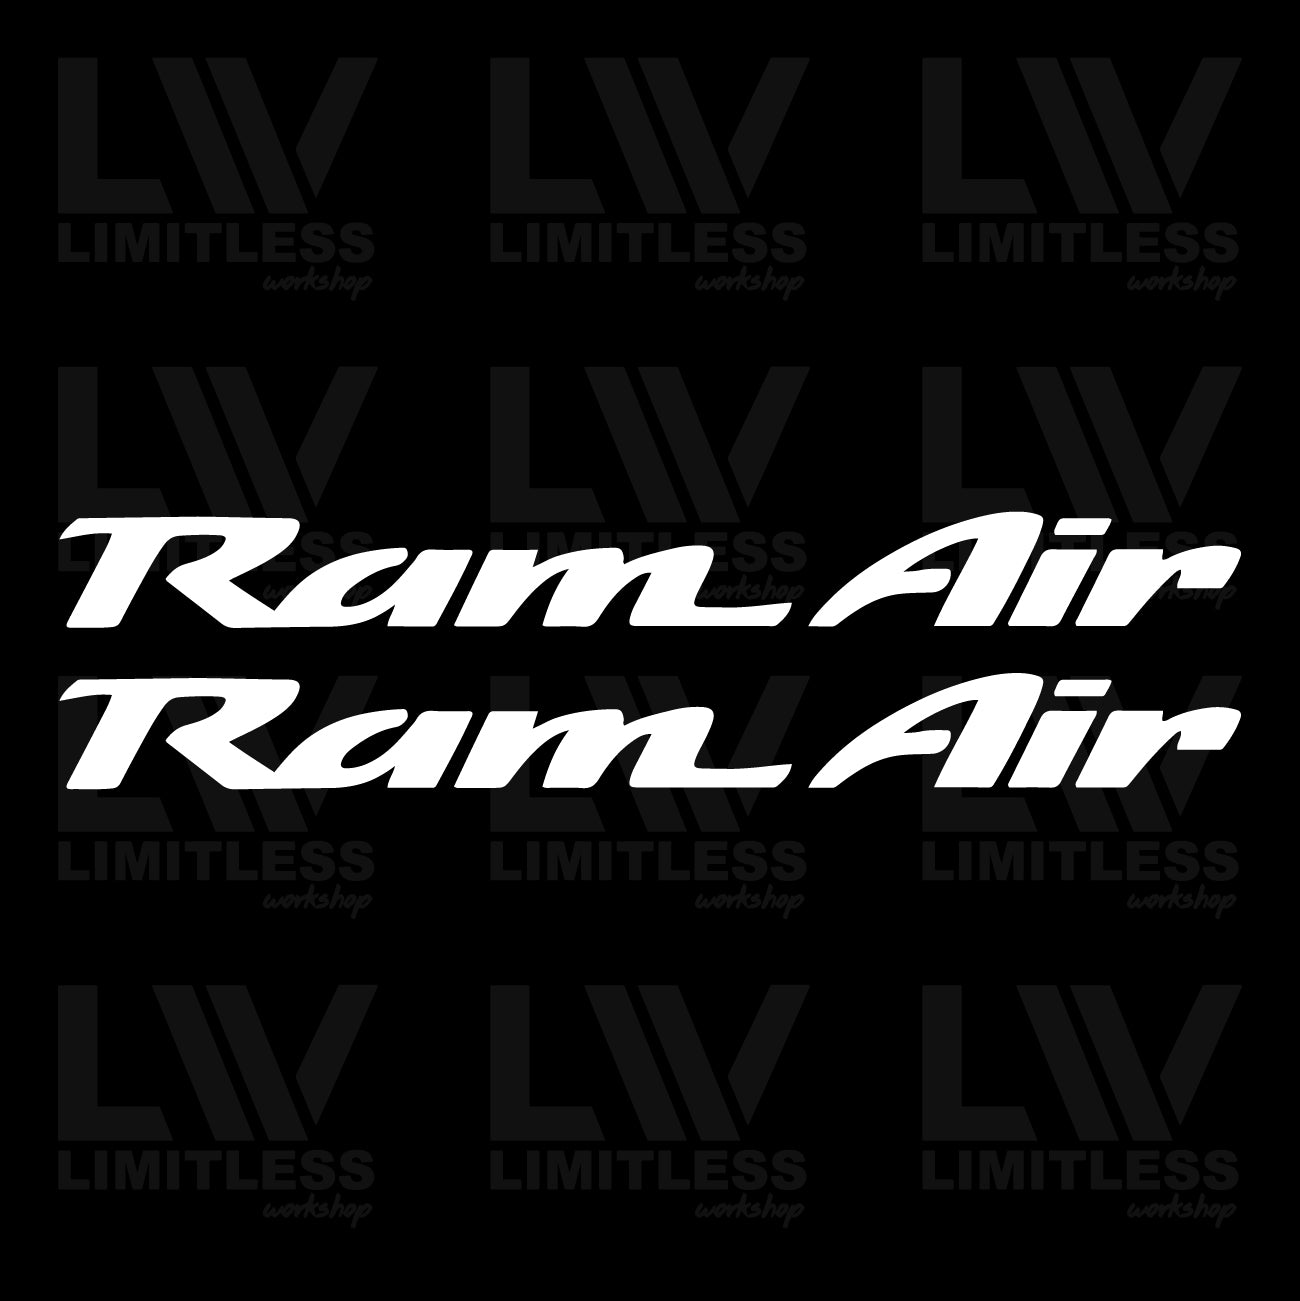 Ram Air Hood Decal Set - Decal